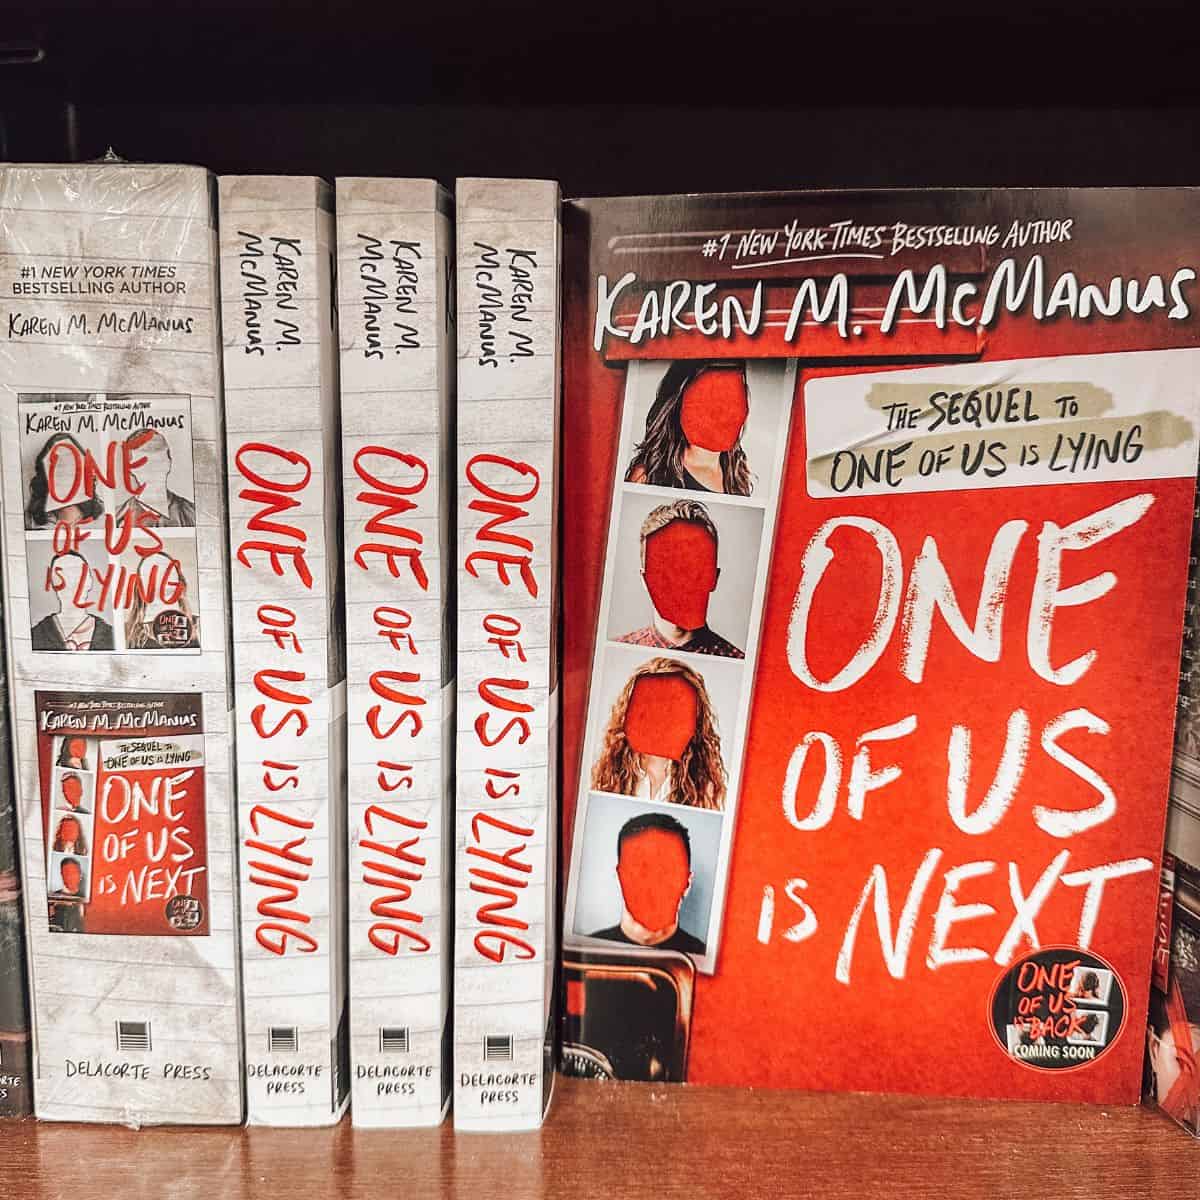 One of us is lying series by Karen m. McManus on a bookshelf.